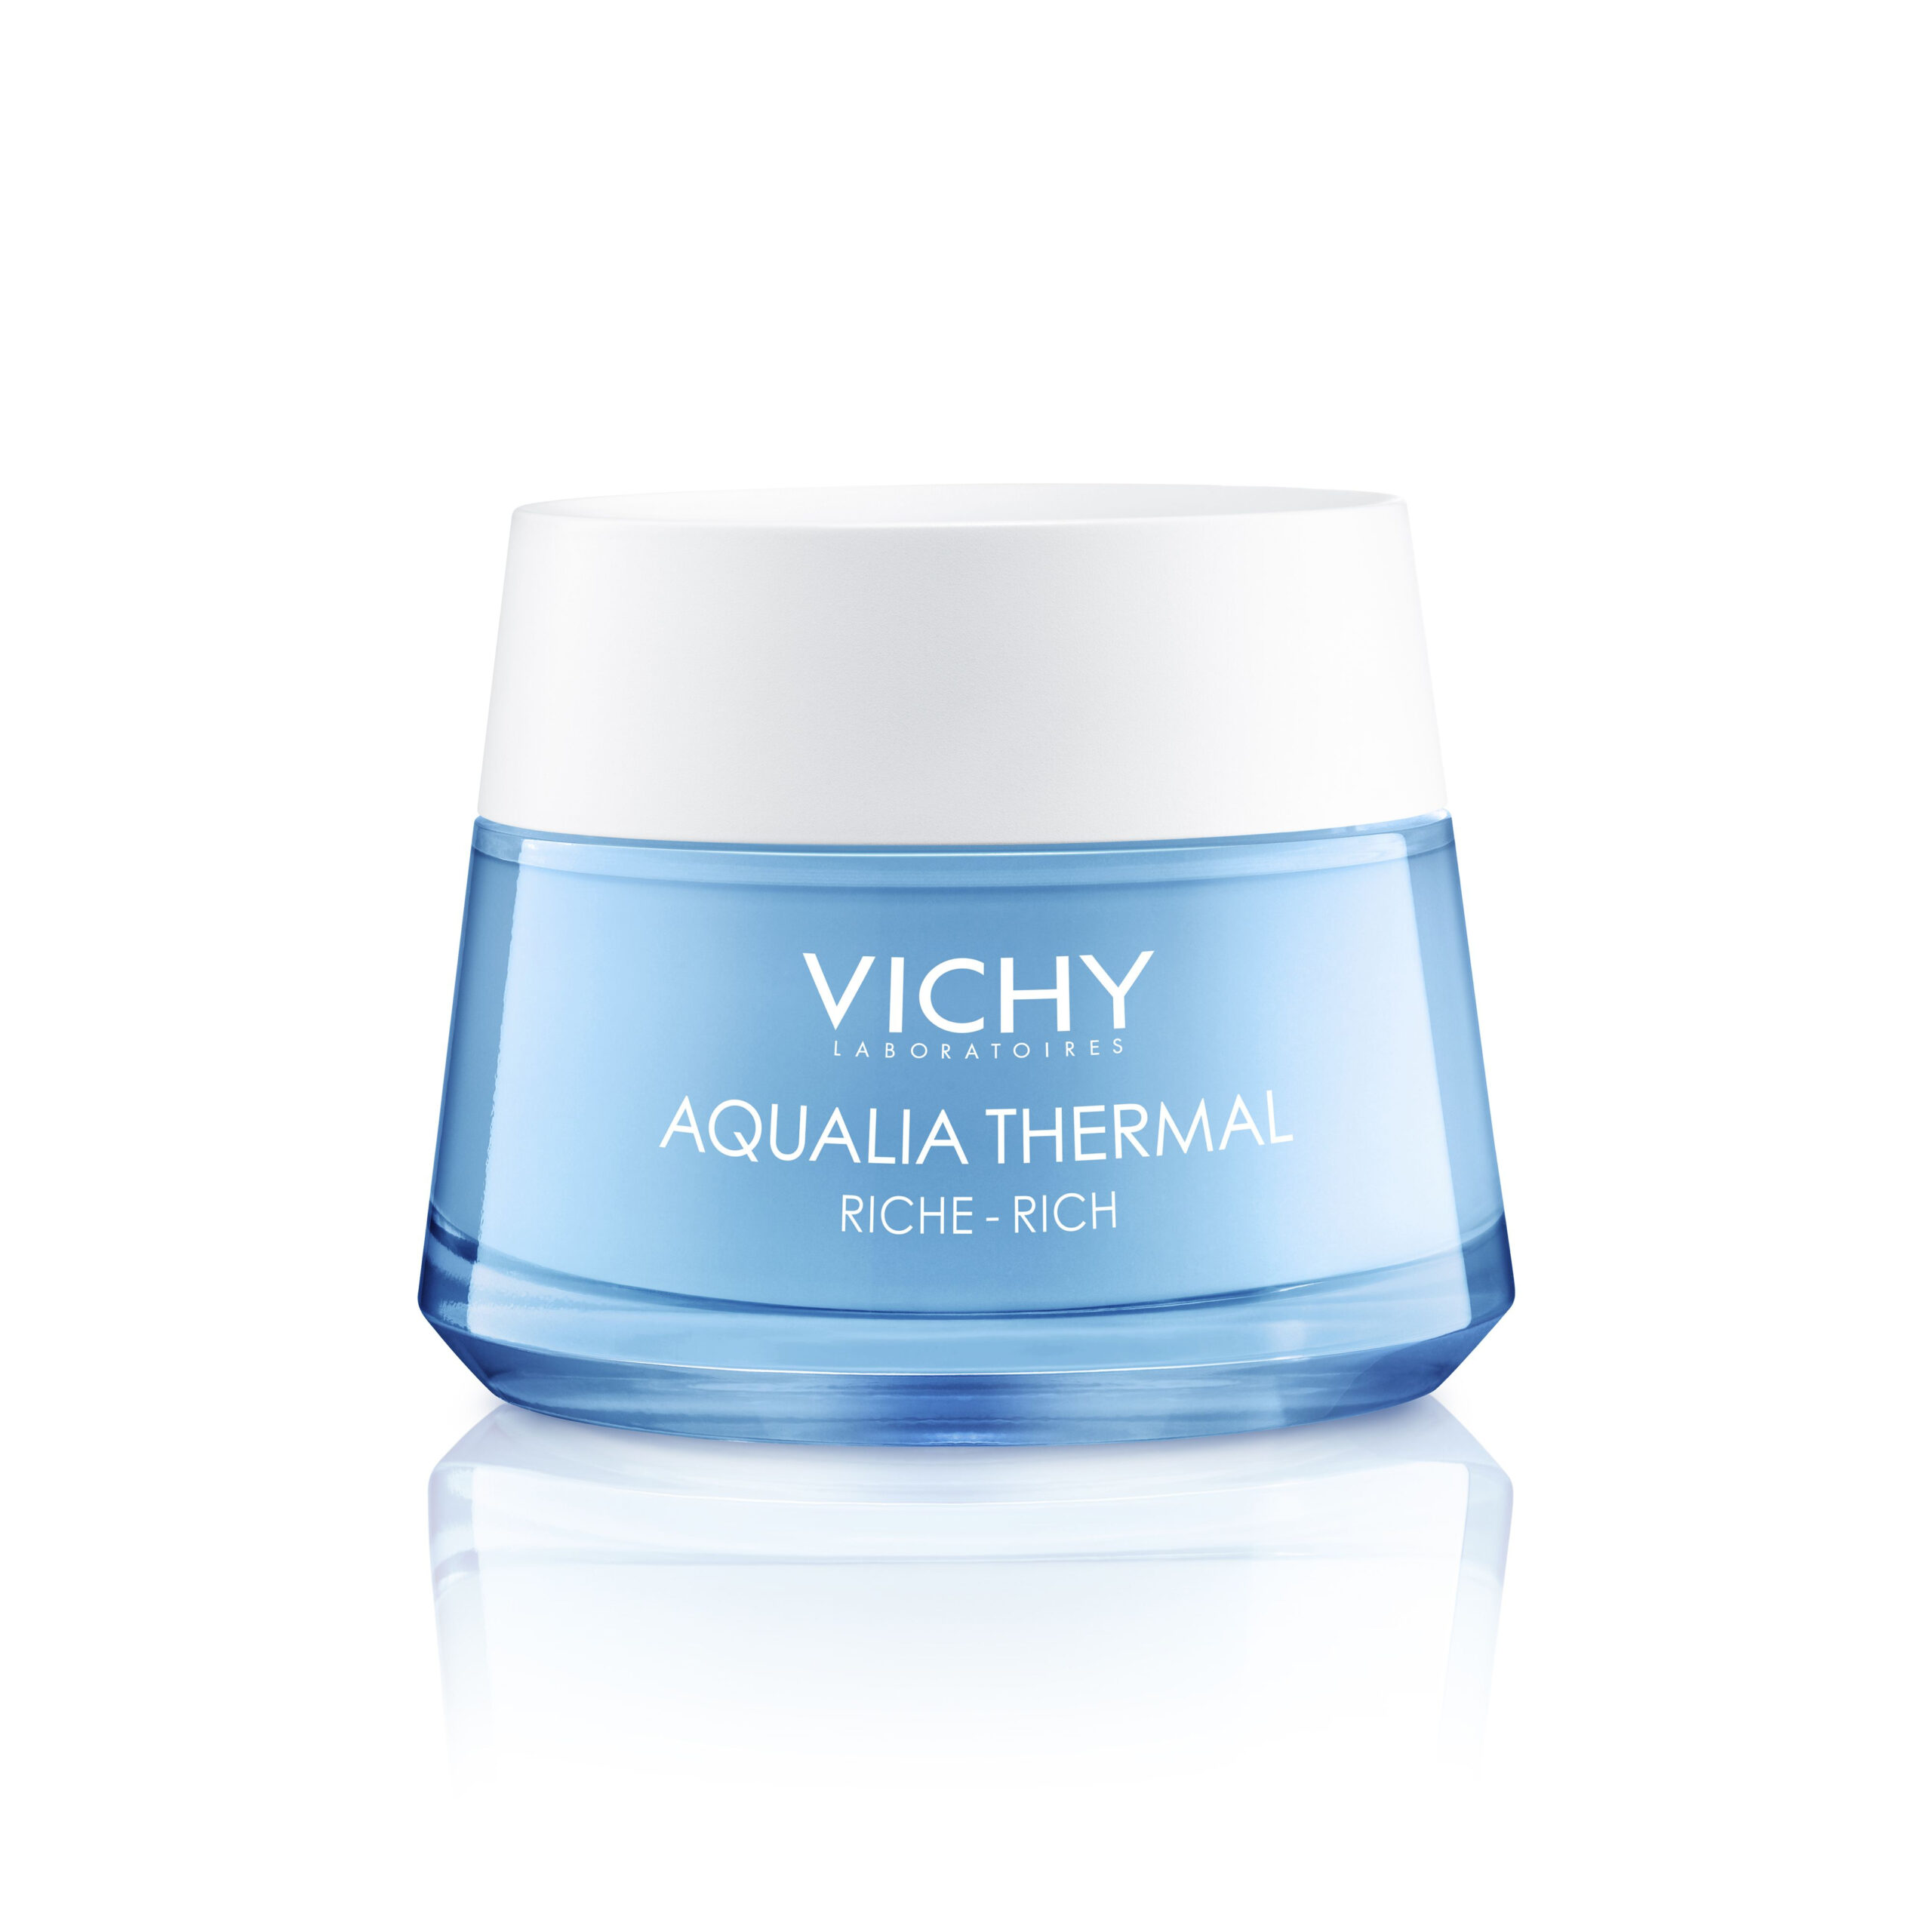 Vichy Aqualia Thermal Riche hydratační krém 50 ml Vichy